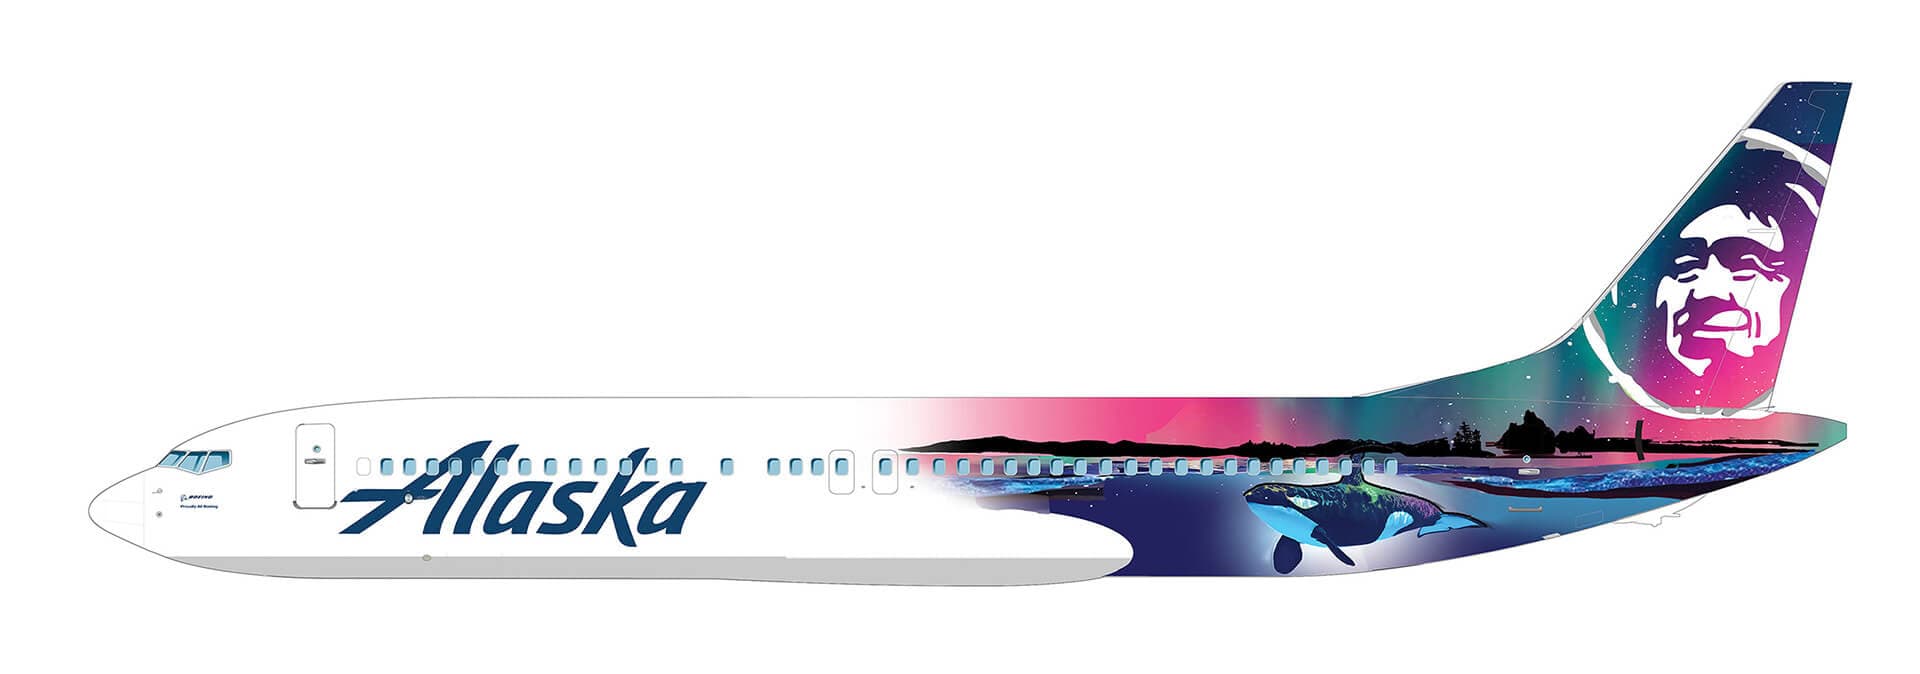 Alaska Airlines 737 orca livery design concept northern lights